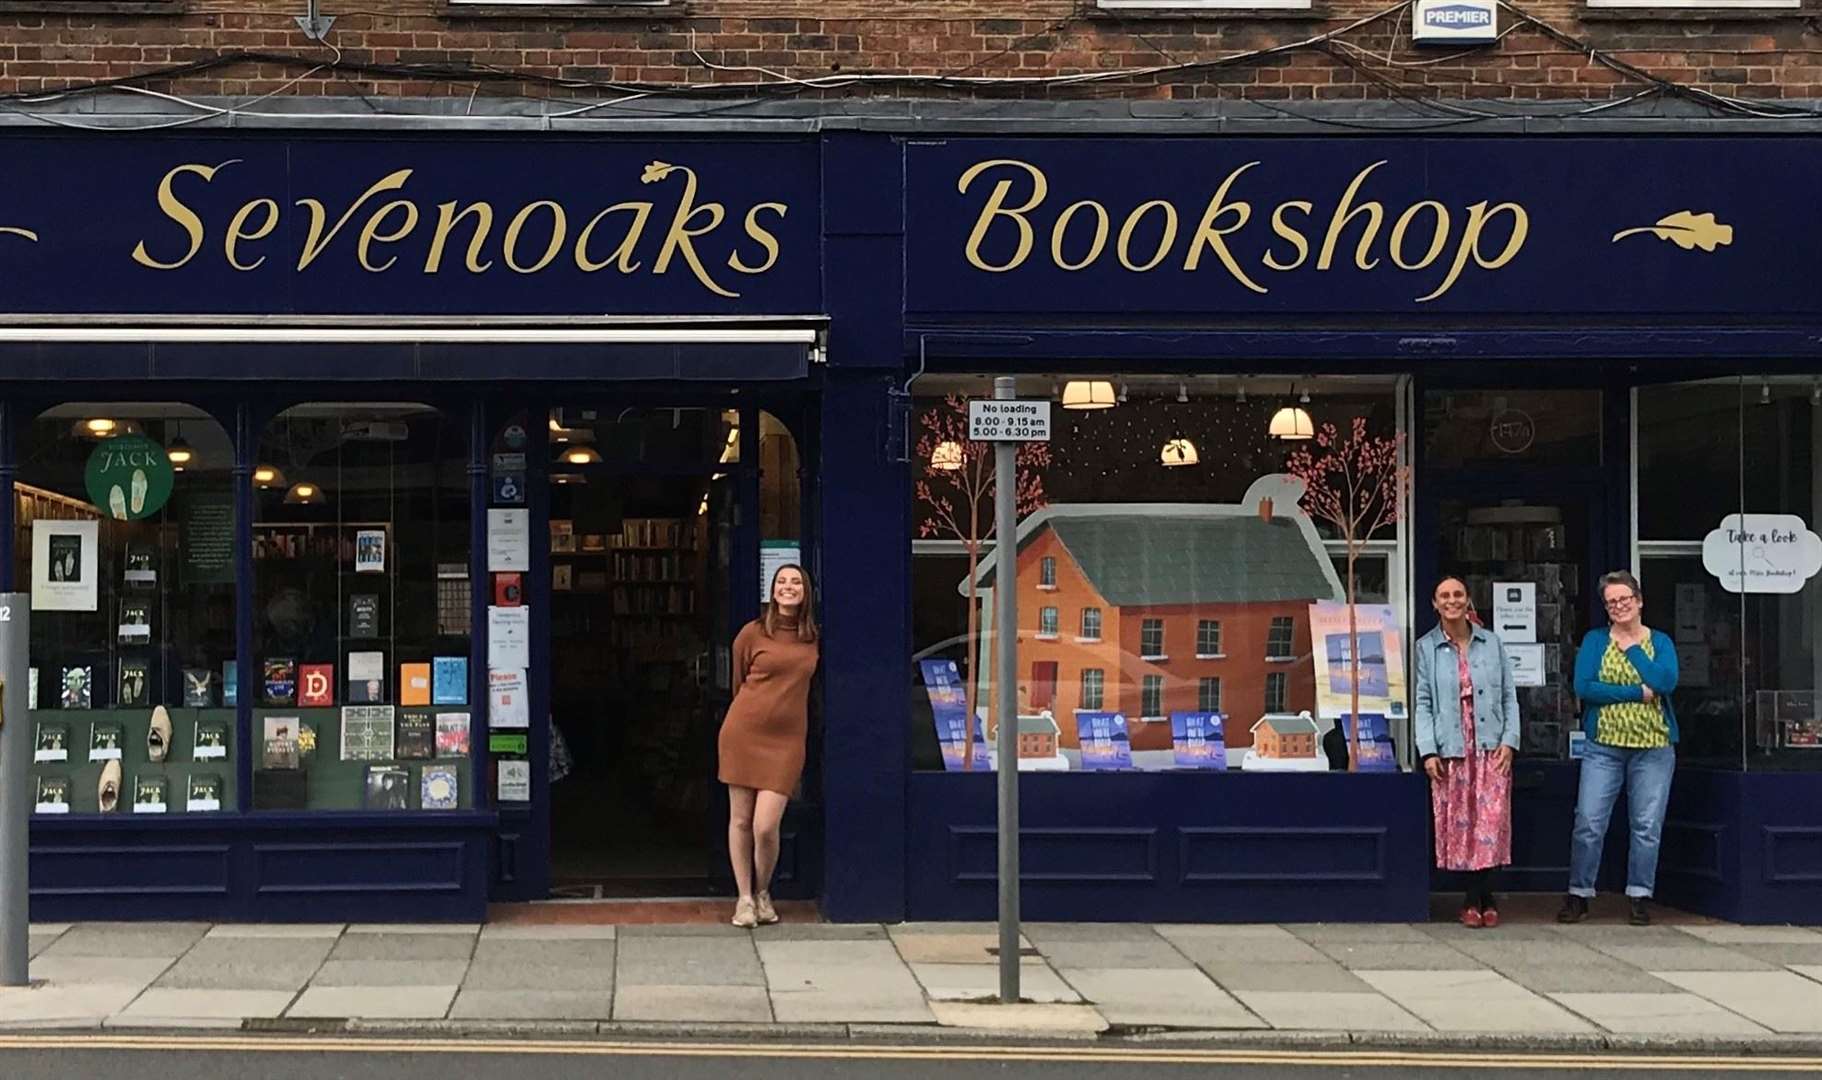 Sevenoaks Bookshop was praised by The Sunday Times judging panel